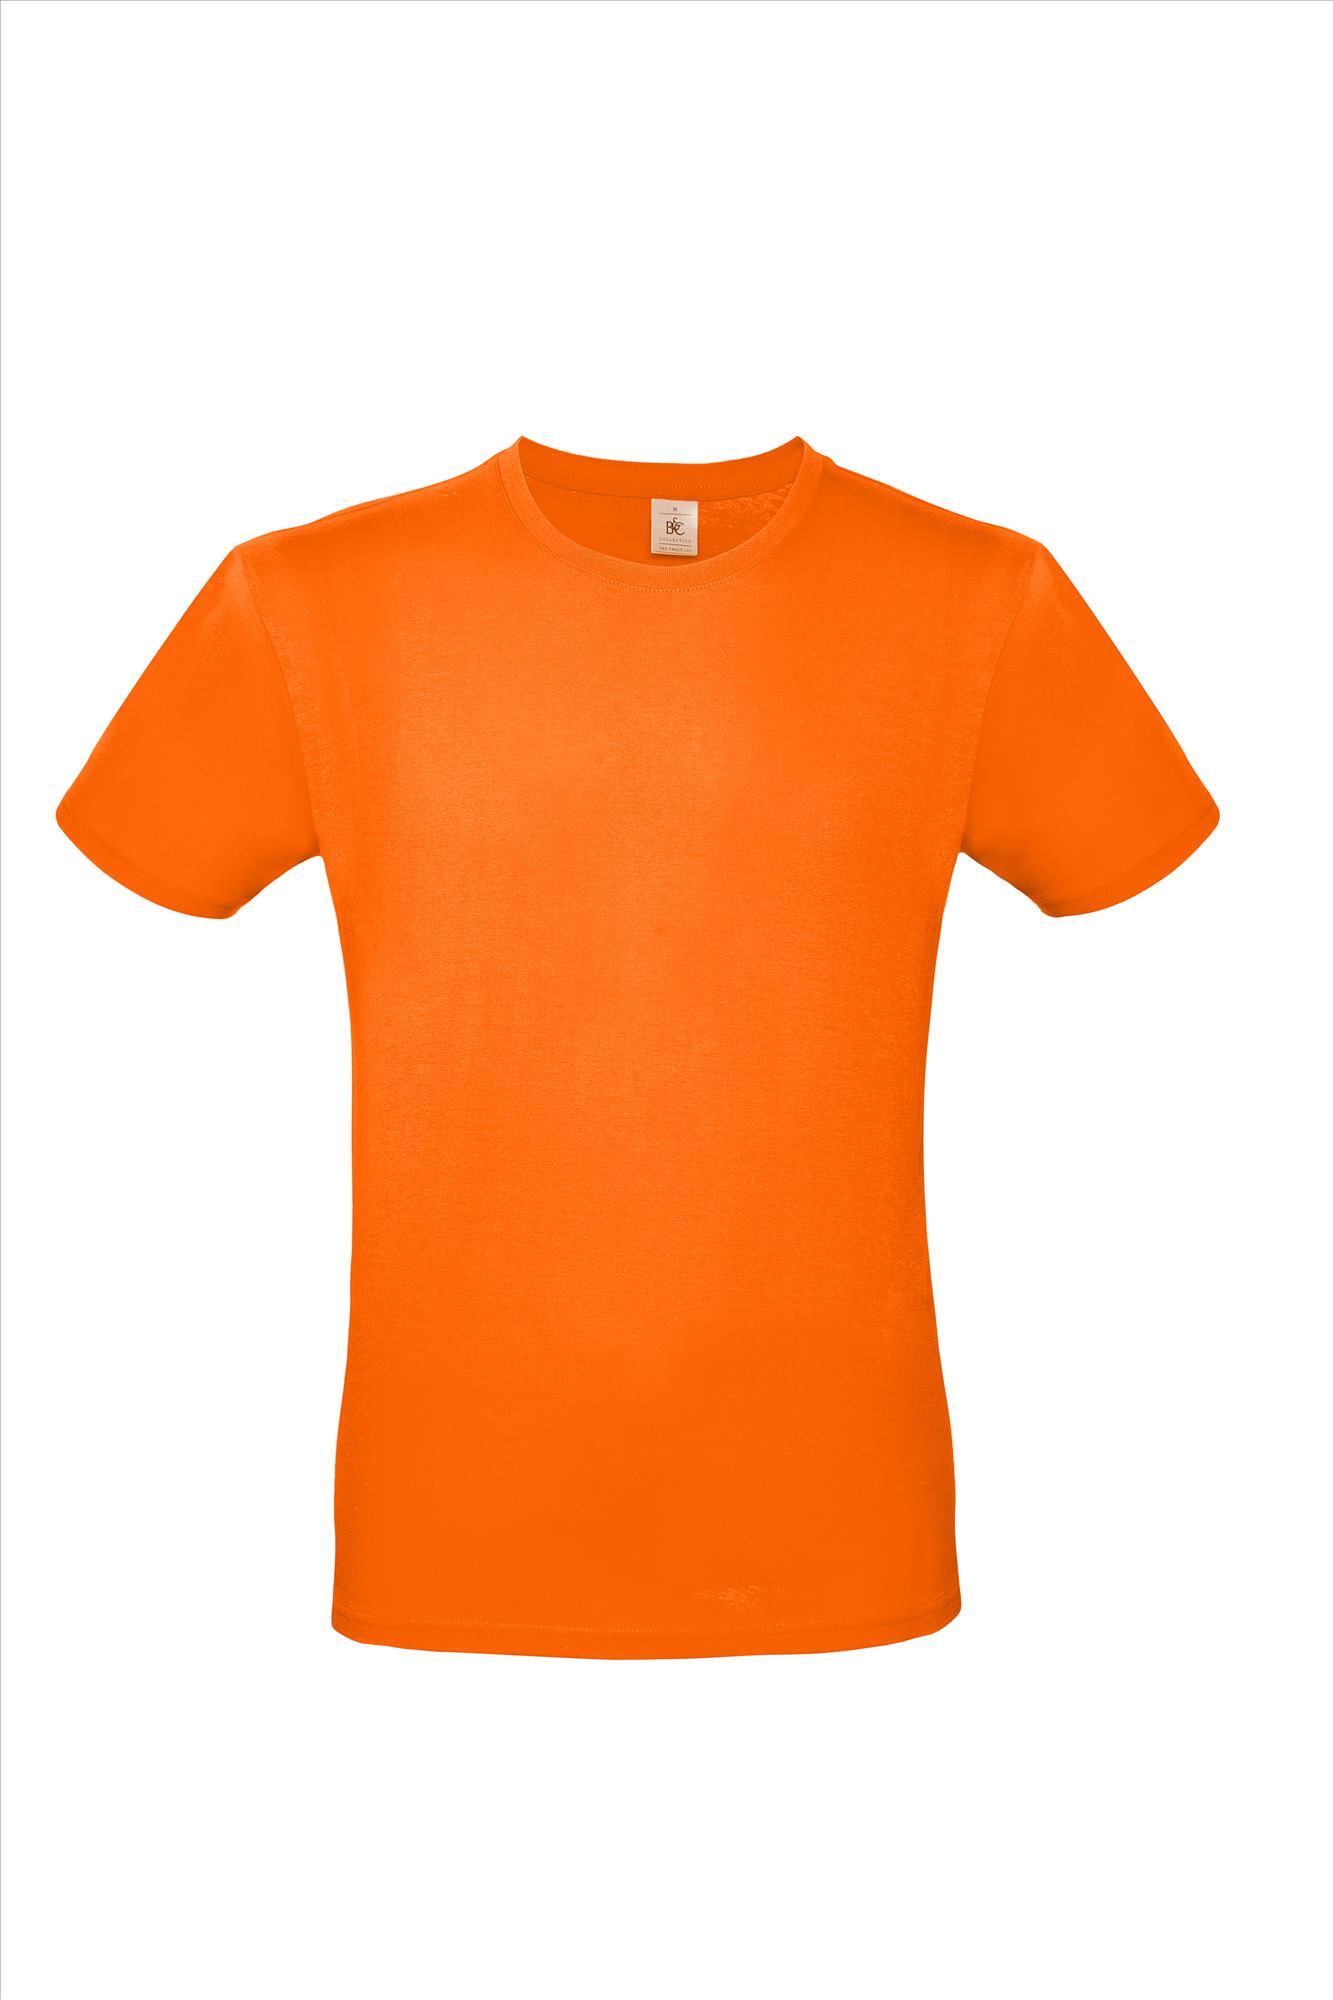 Modern T-shirt voor hem fraai heren shirt oranje koningsdag